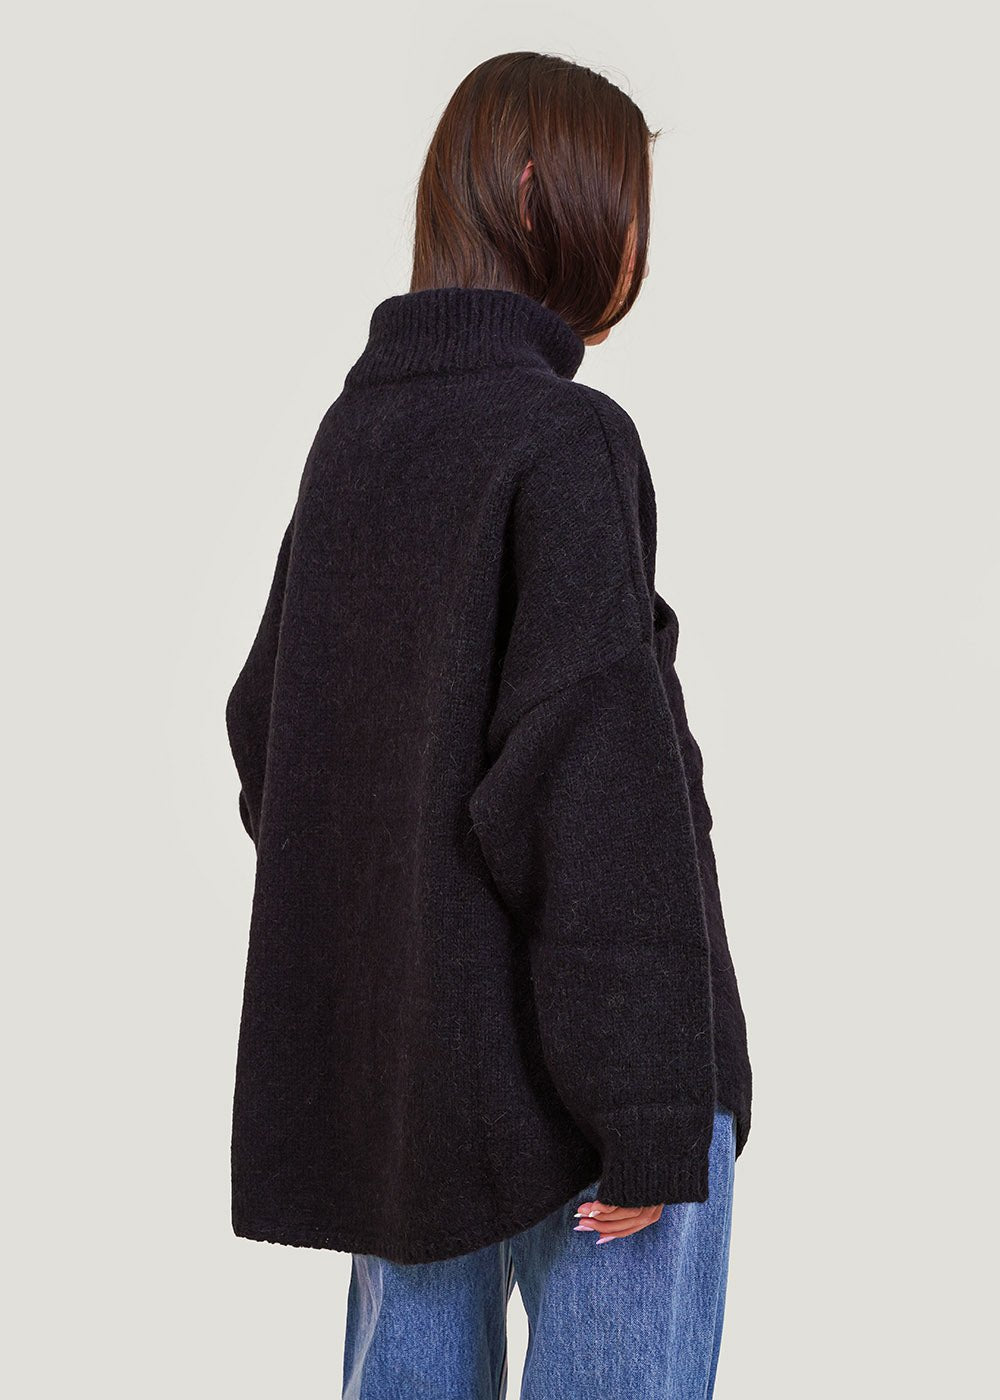 Cordera Black Baby Alpaca Polo Jacket - New Classics Studios Sustainable Ethical Fashion Canada